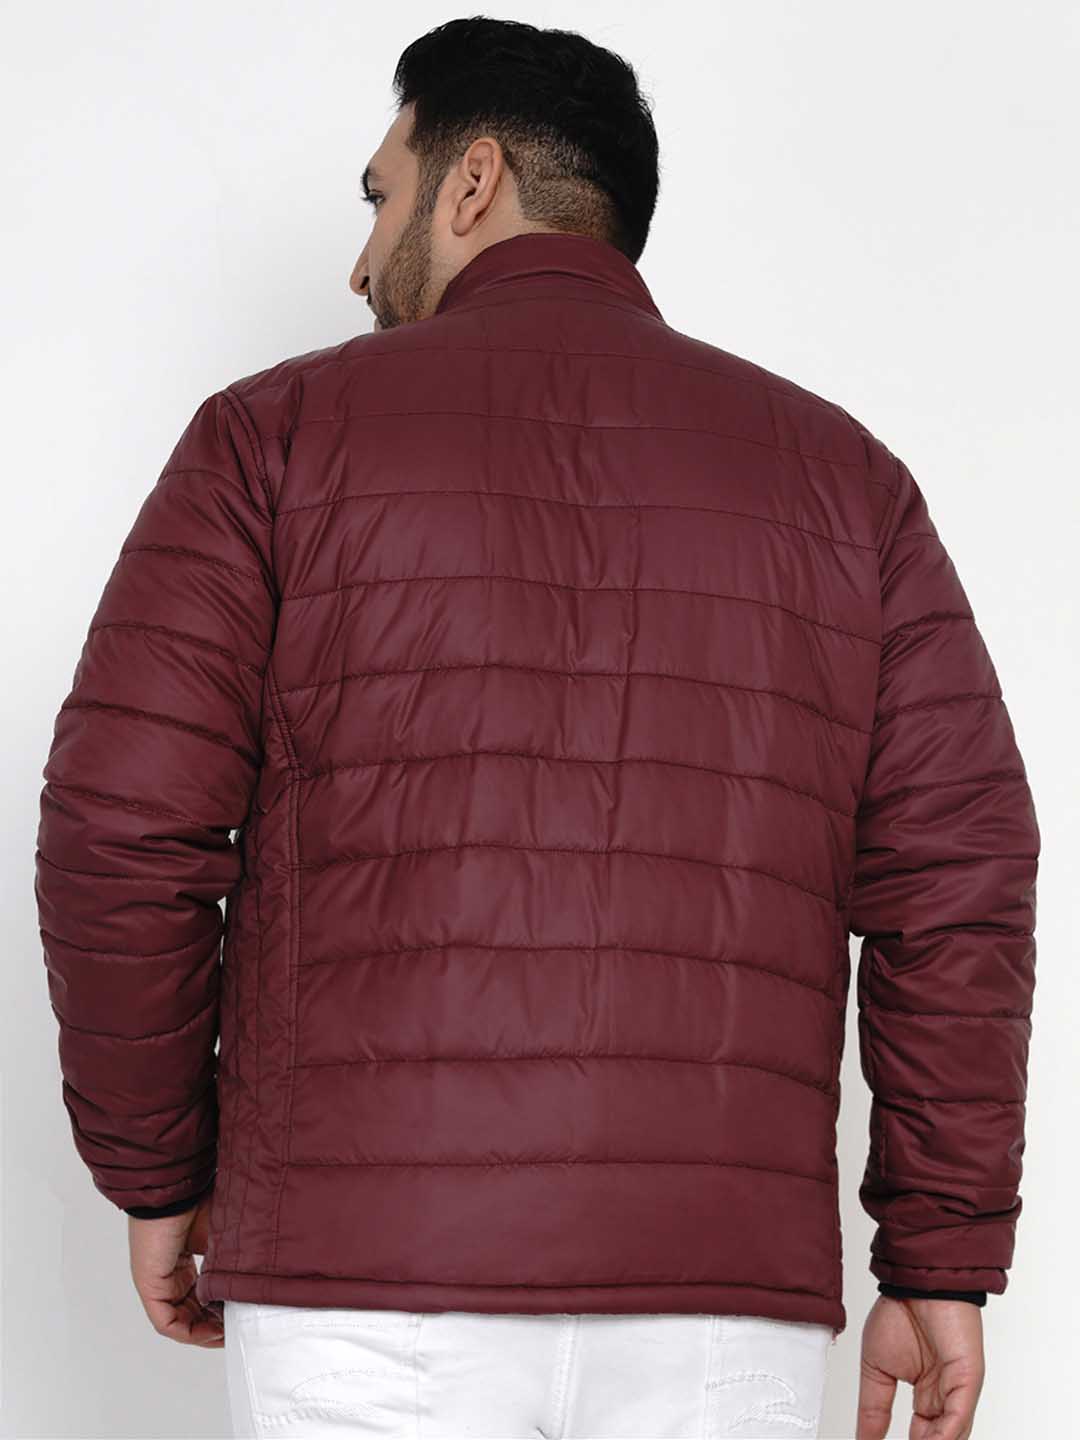 winterwear/jackets/JPJKT7388/jpjkt7388-5.jpg